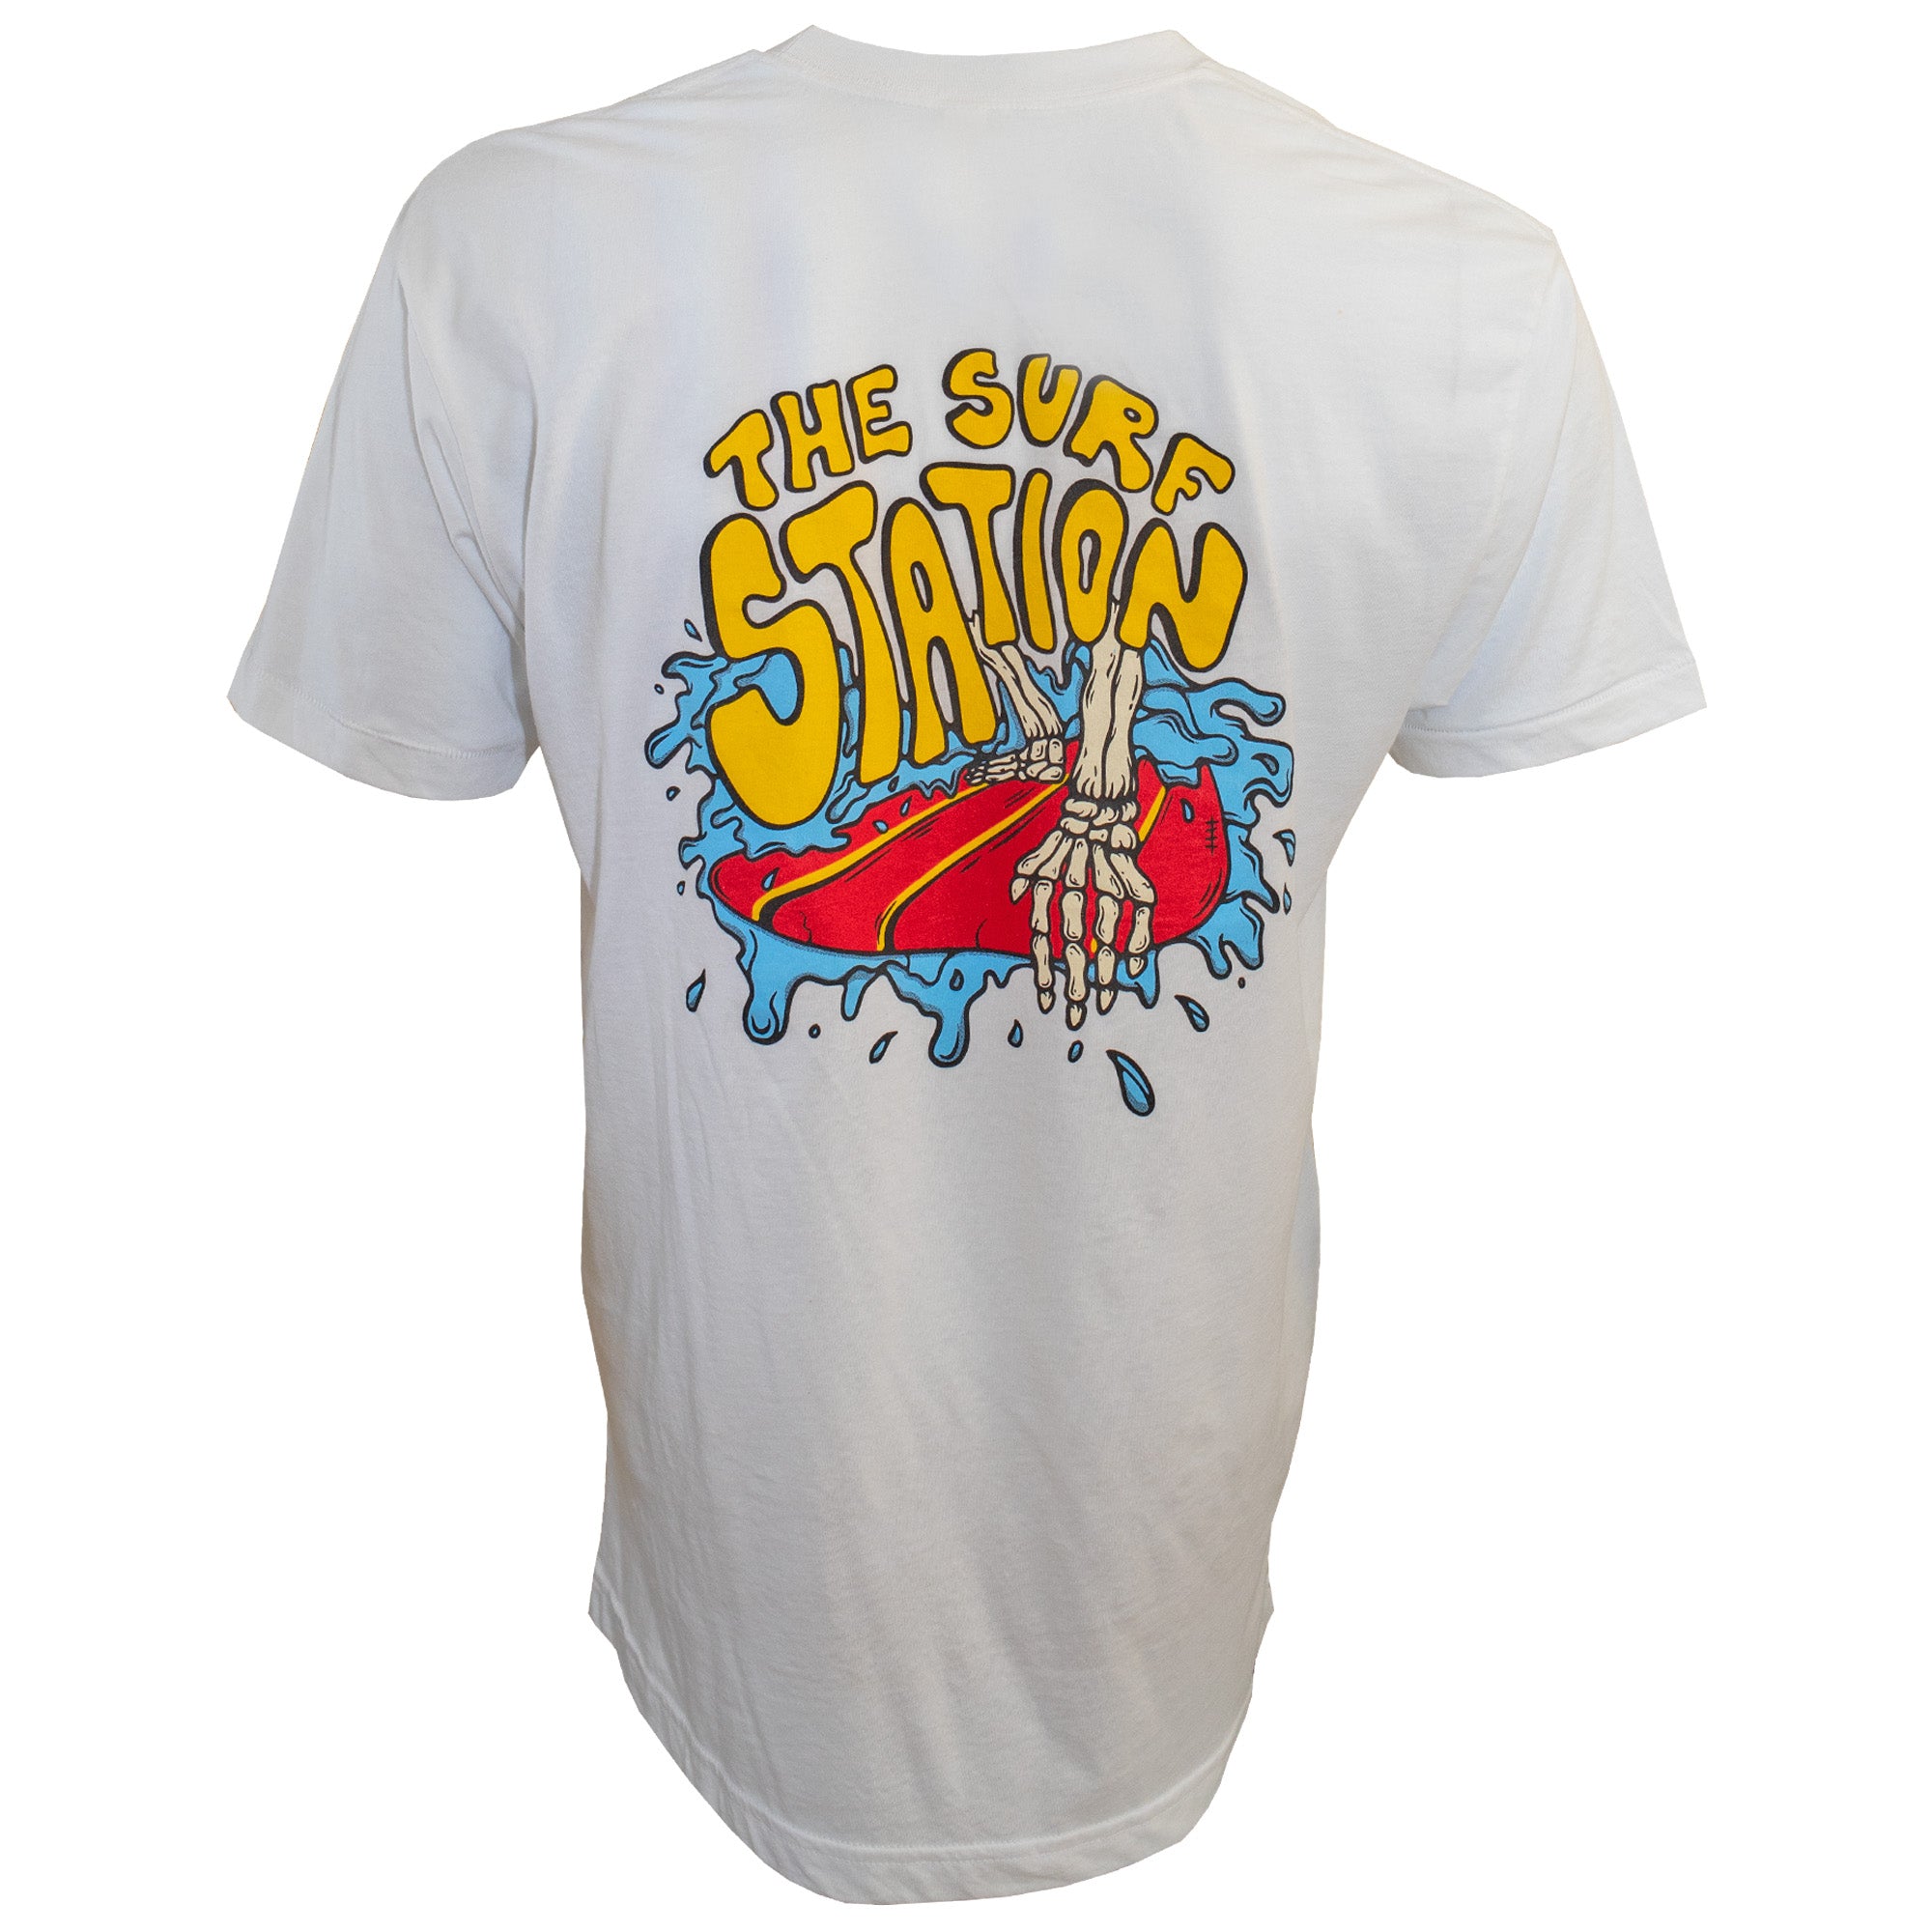 Surf Station x Chase Berenson Cheater 5 Men's S/S T-Shirt